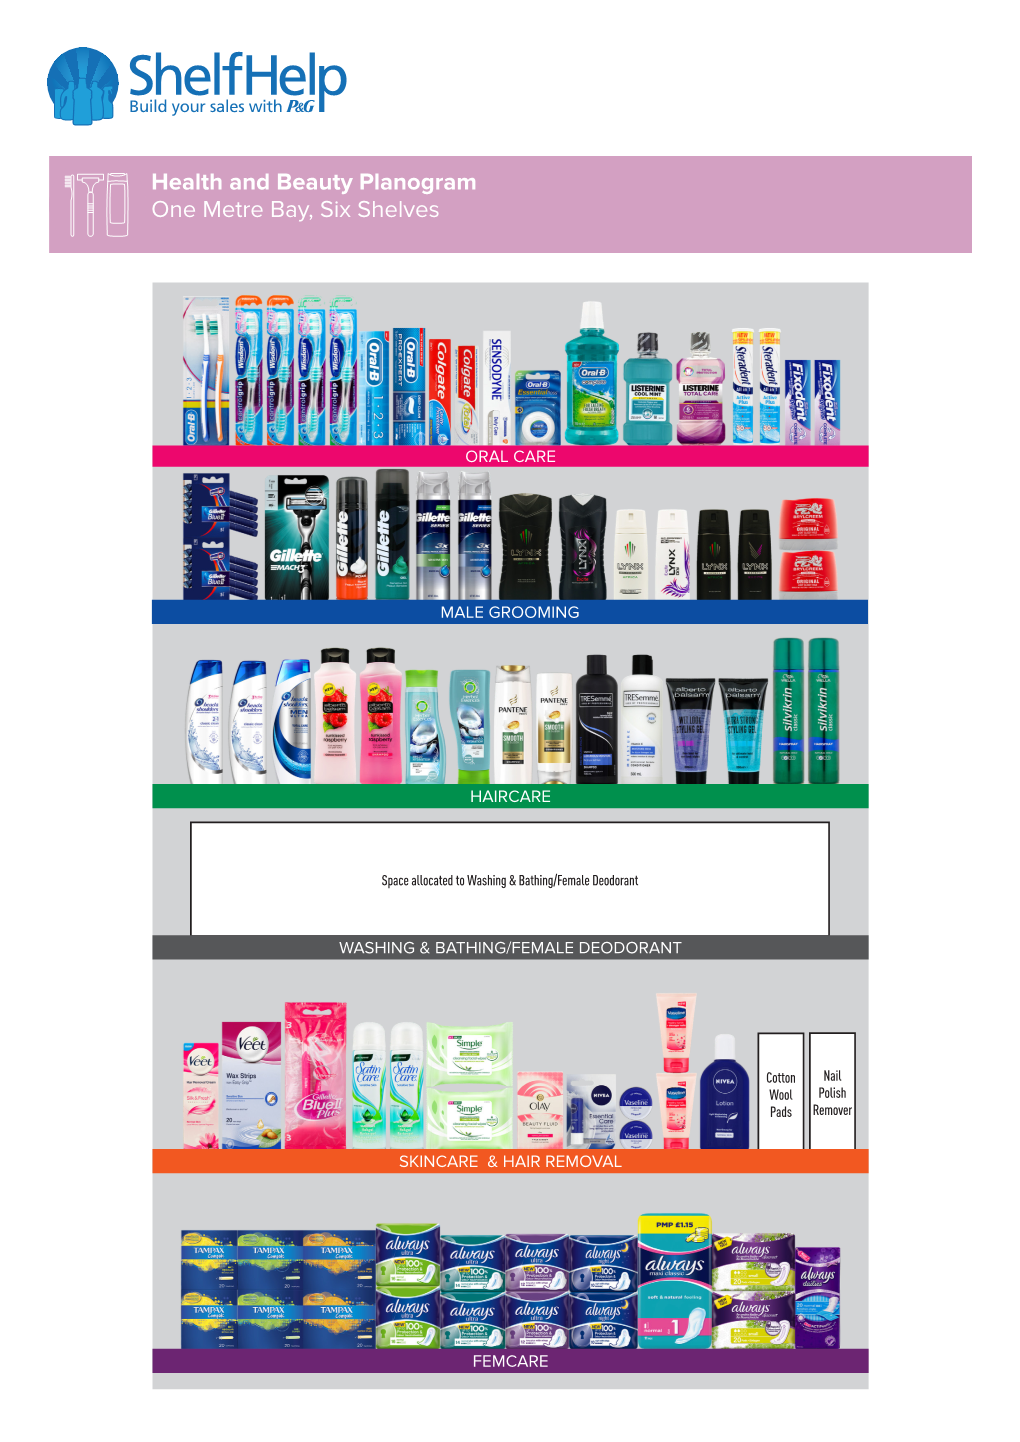 Health and Beauty Planogram One Metre Bay, Six Shelves